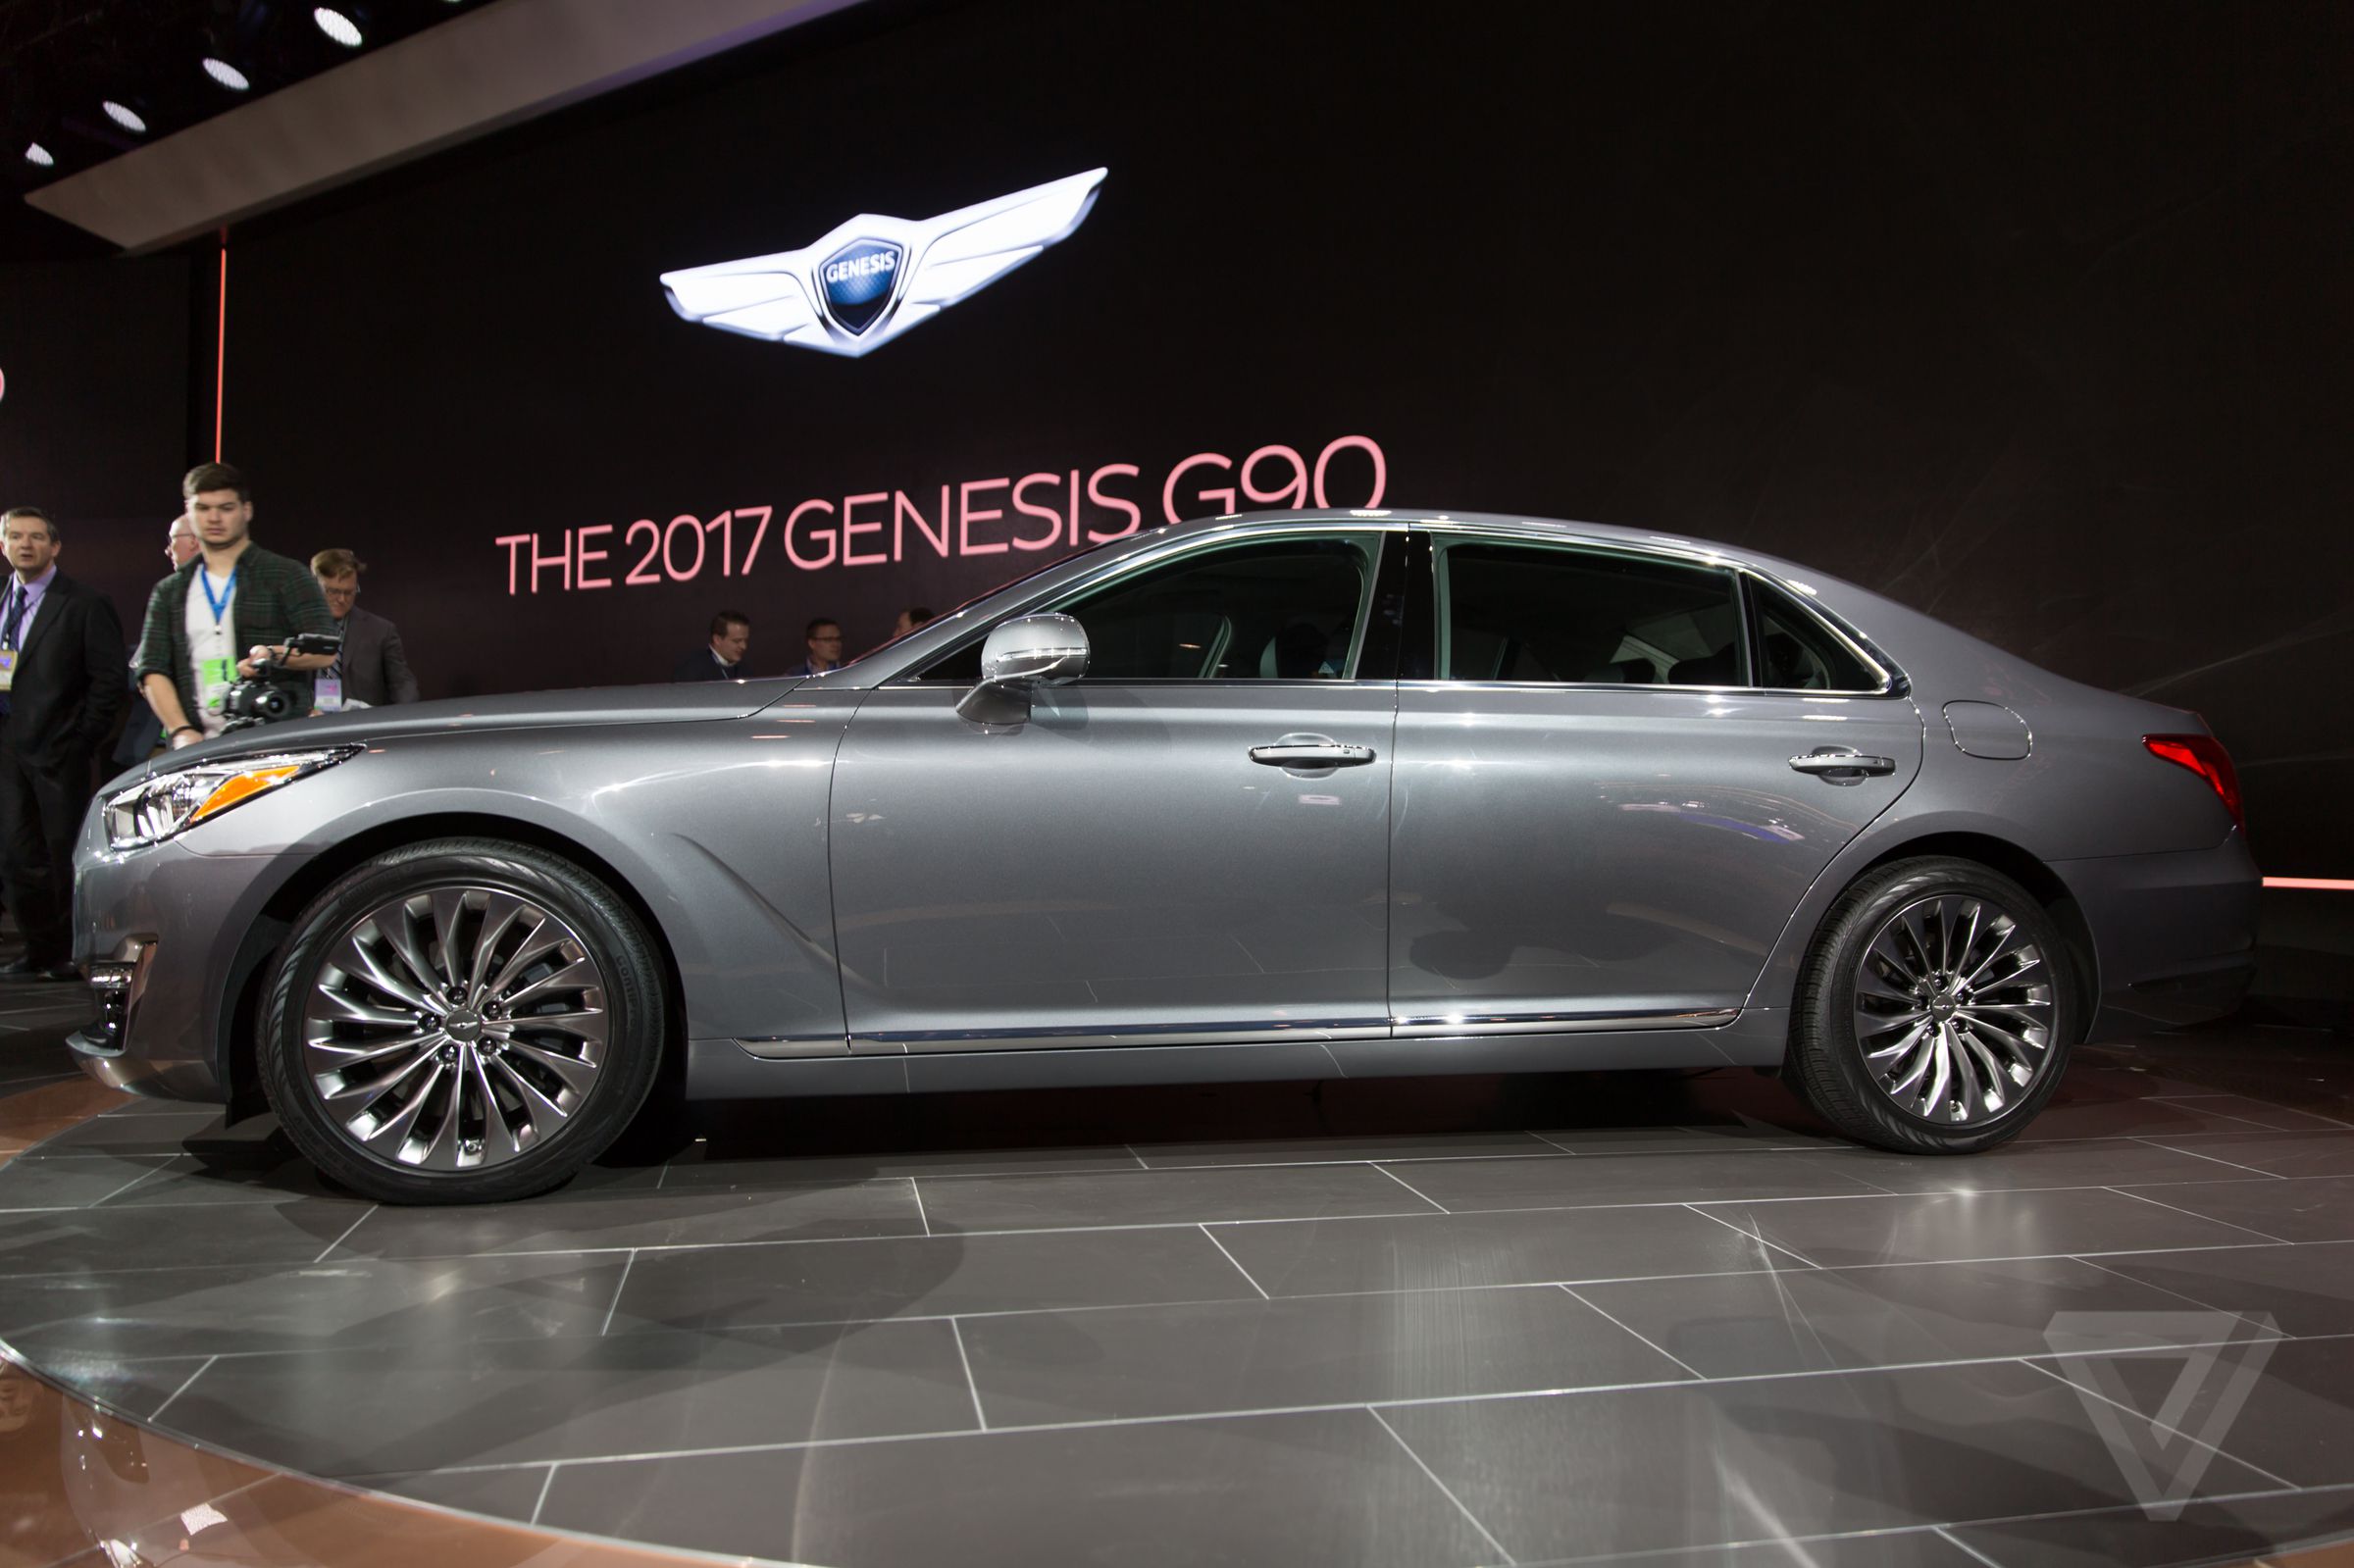 Genesis G90 at the Detroit Auto Show